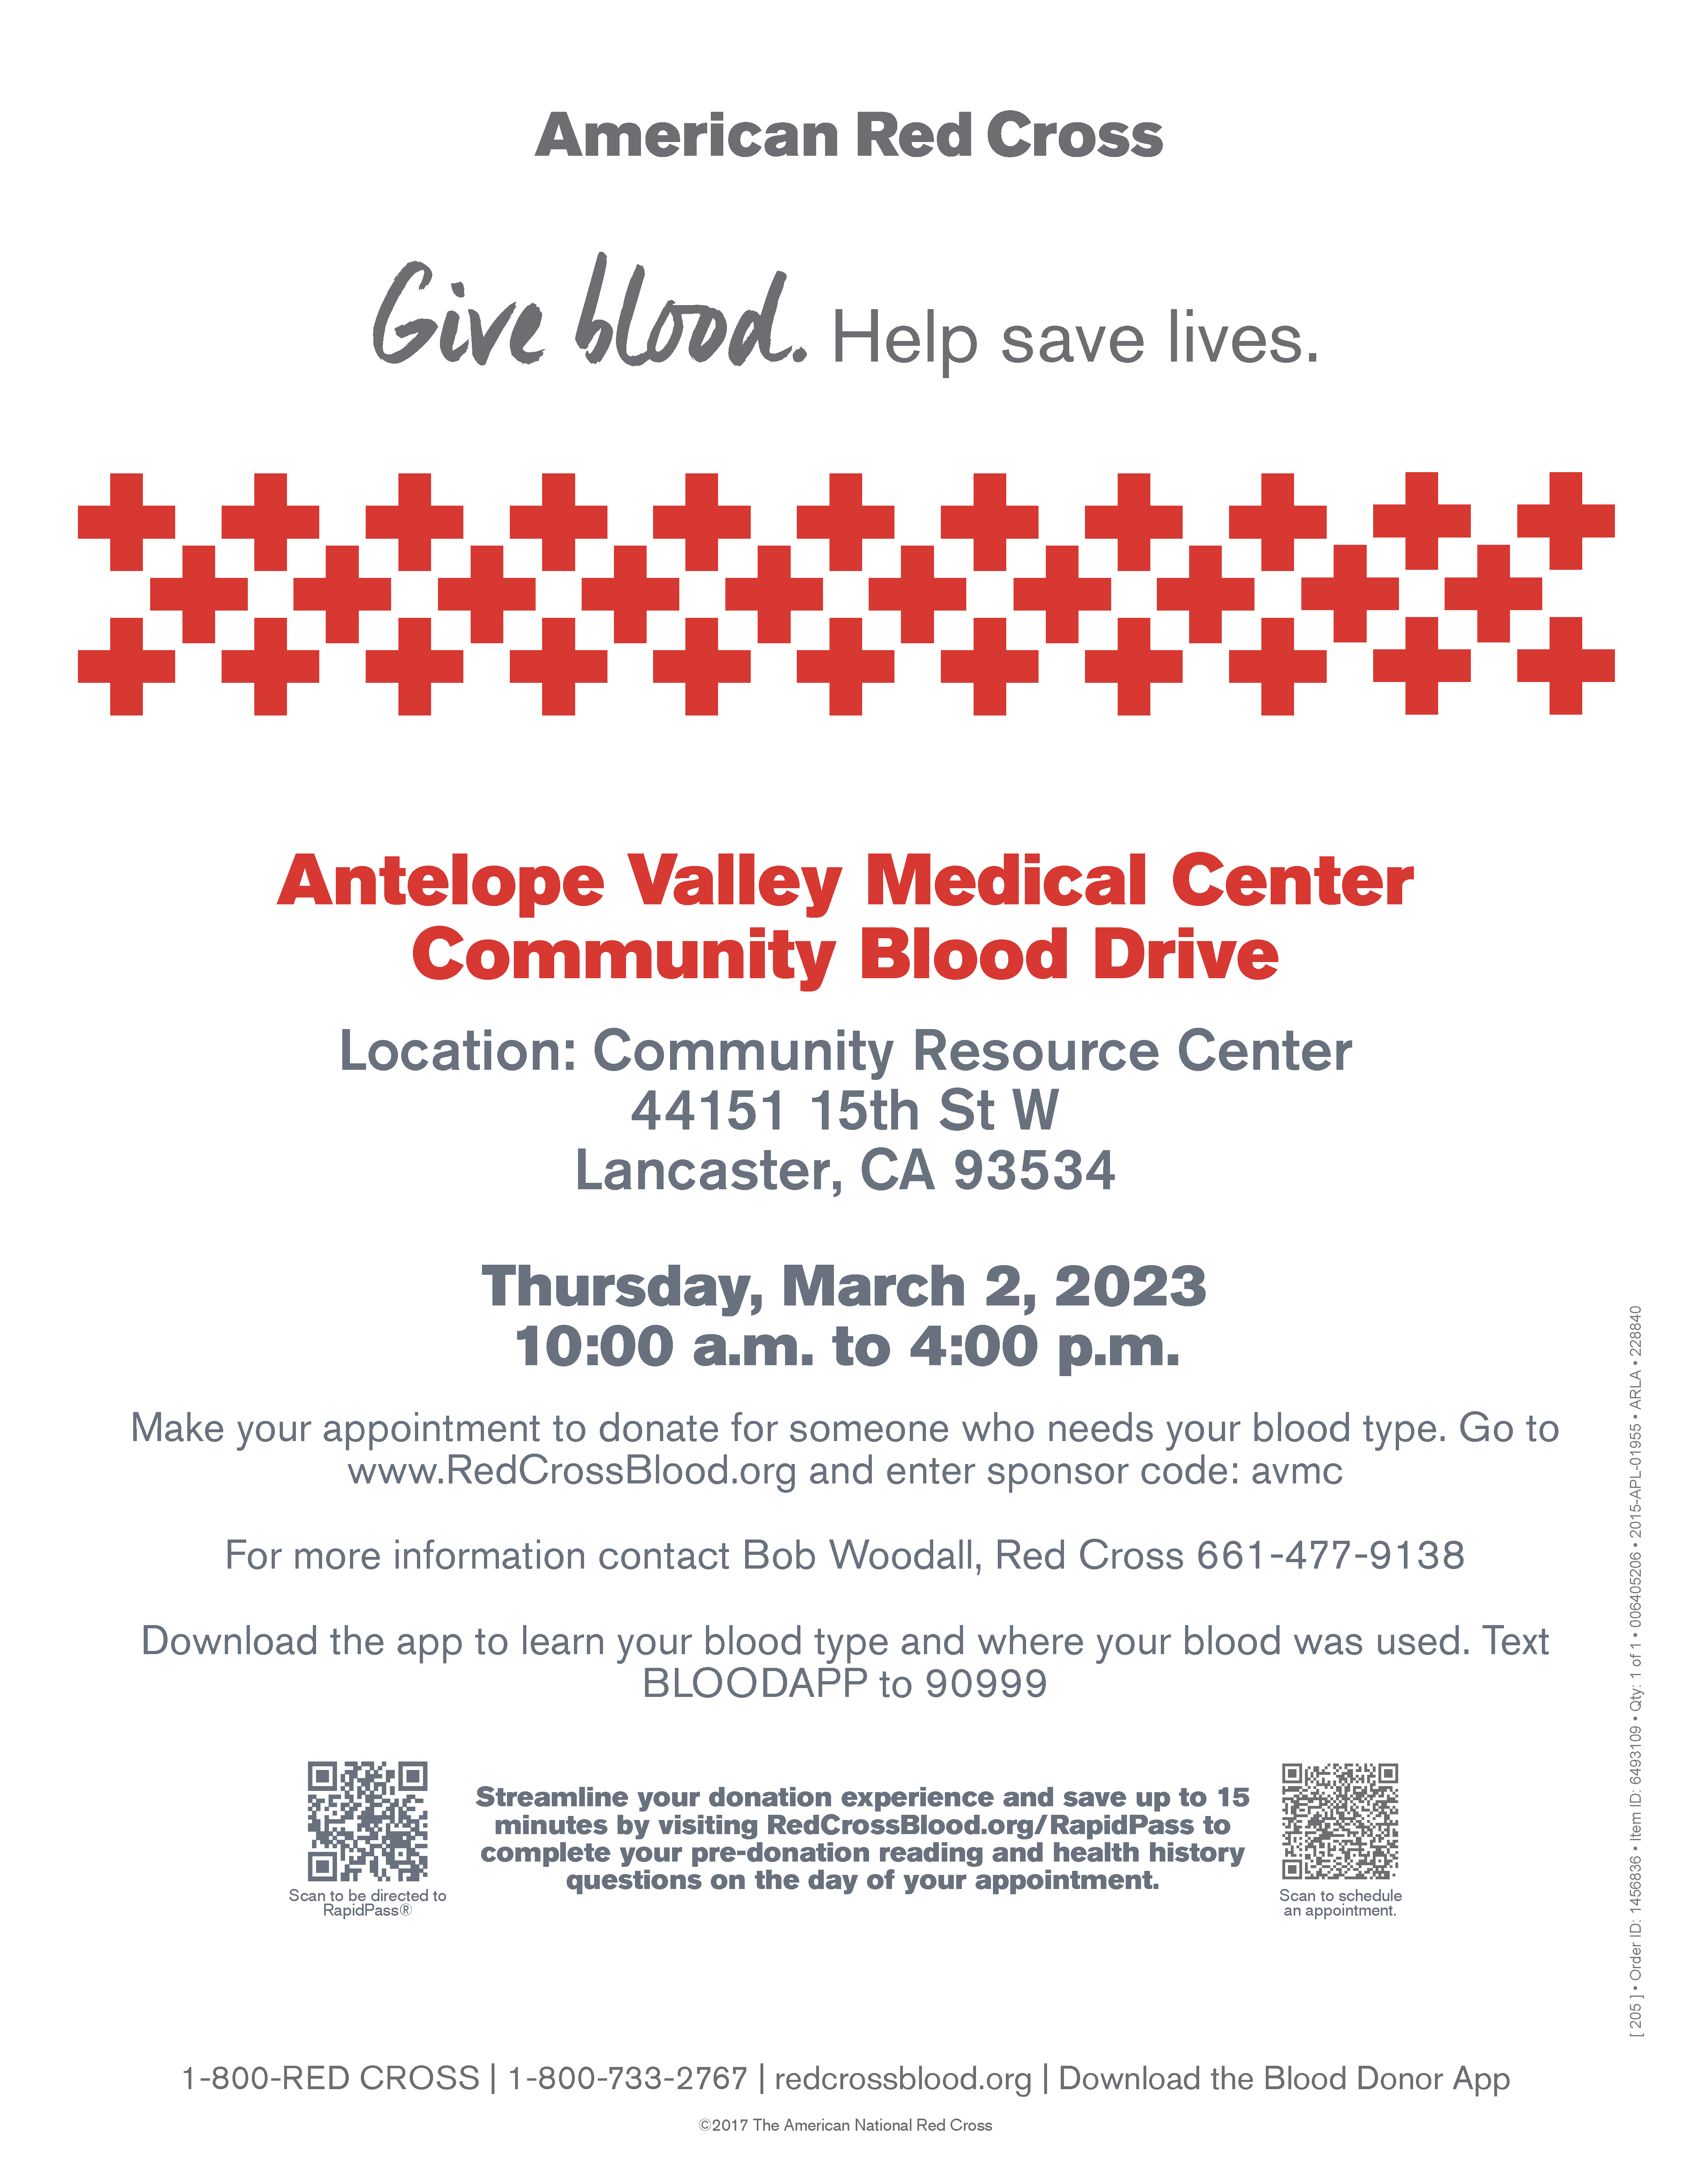 AVMC Community Blood Drive flyer